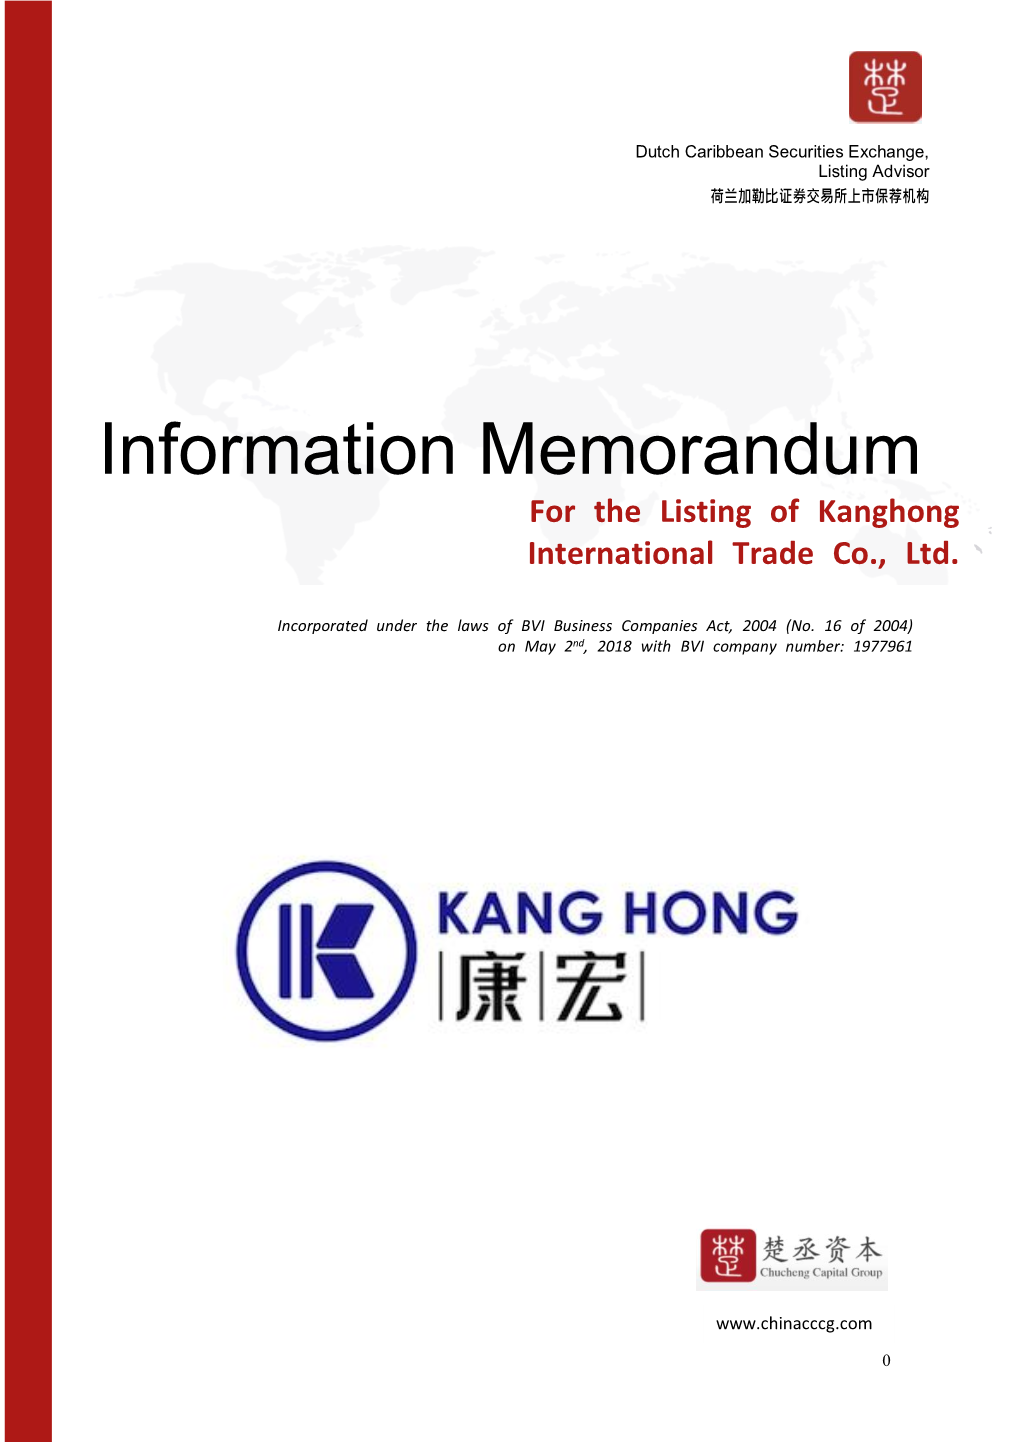 Information Memorandum for the Listing of Kanghong International Trade Co., Ltd